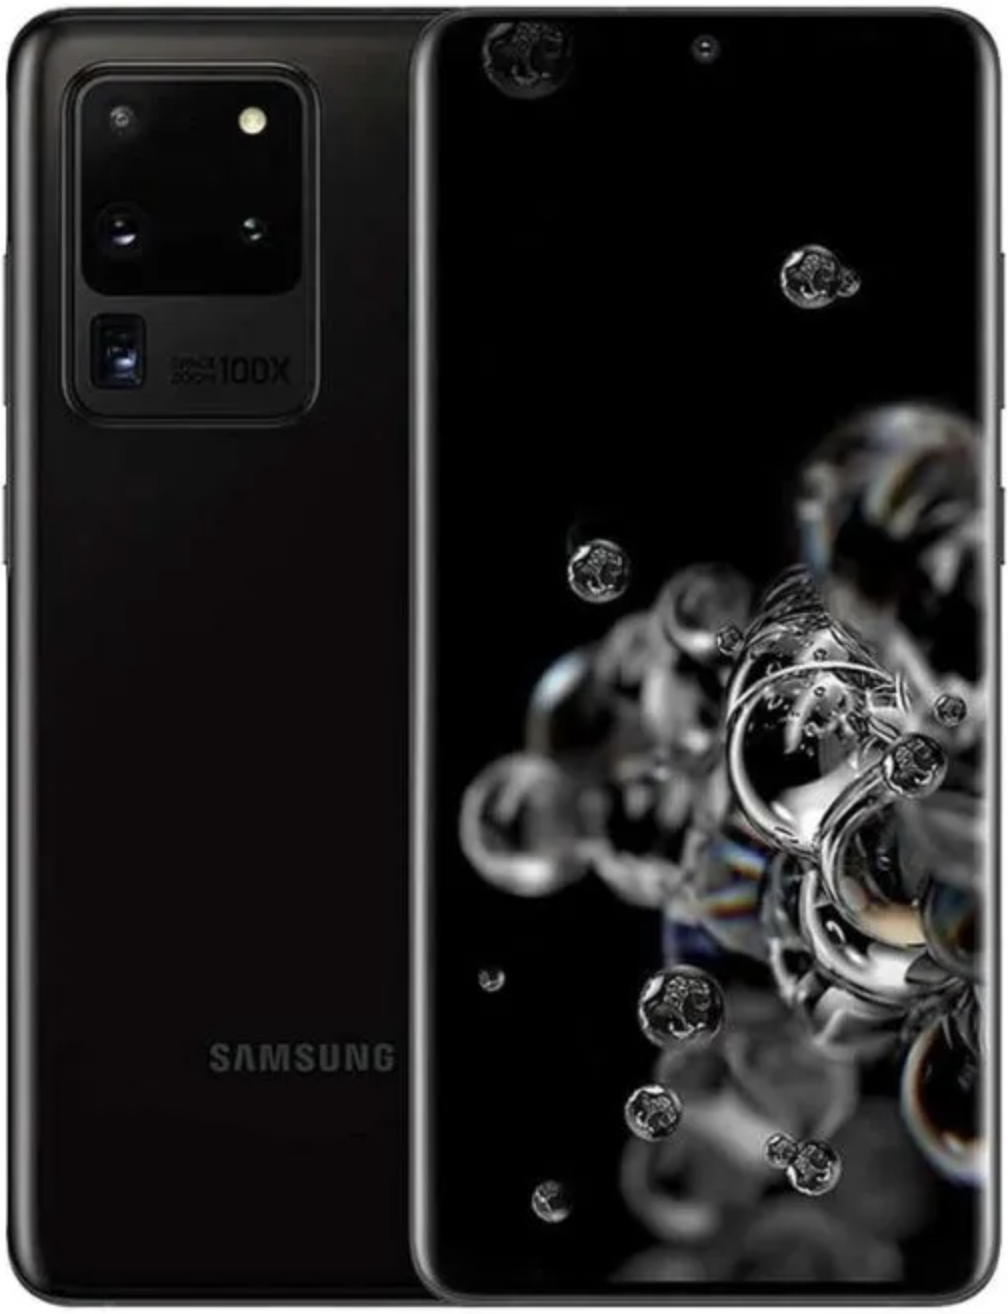 Galaxy S20 Ultra Image